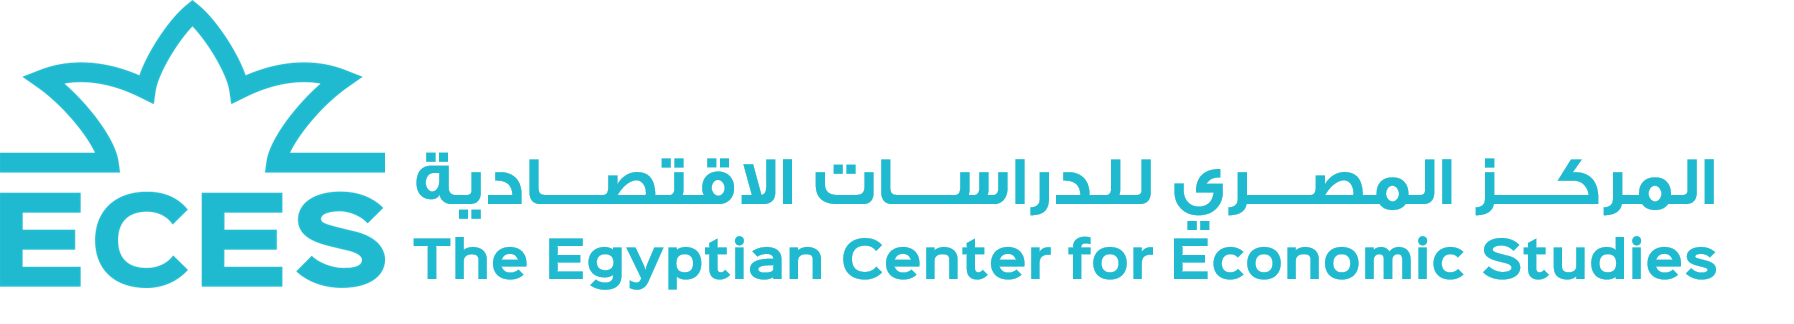 The Egyptian Center for Economic Studies (ECES)